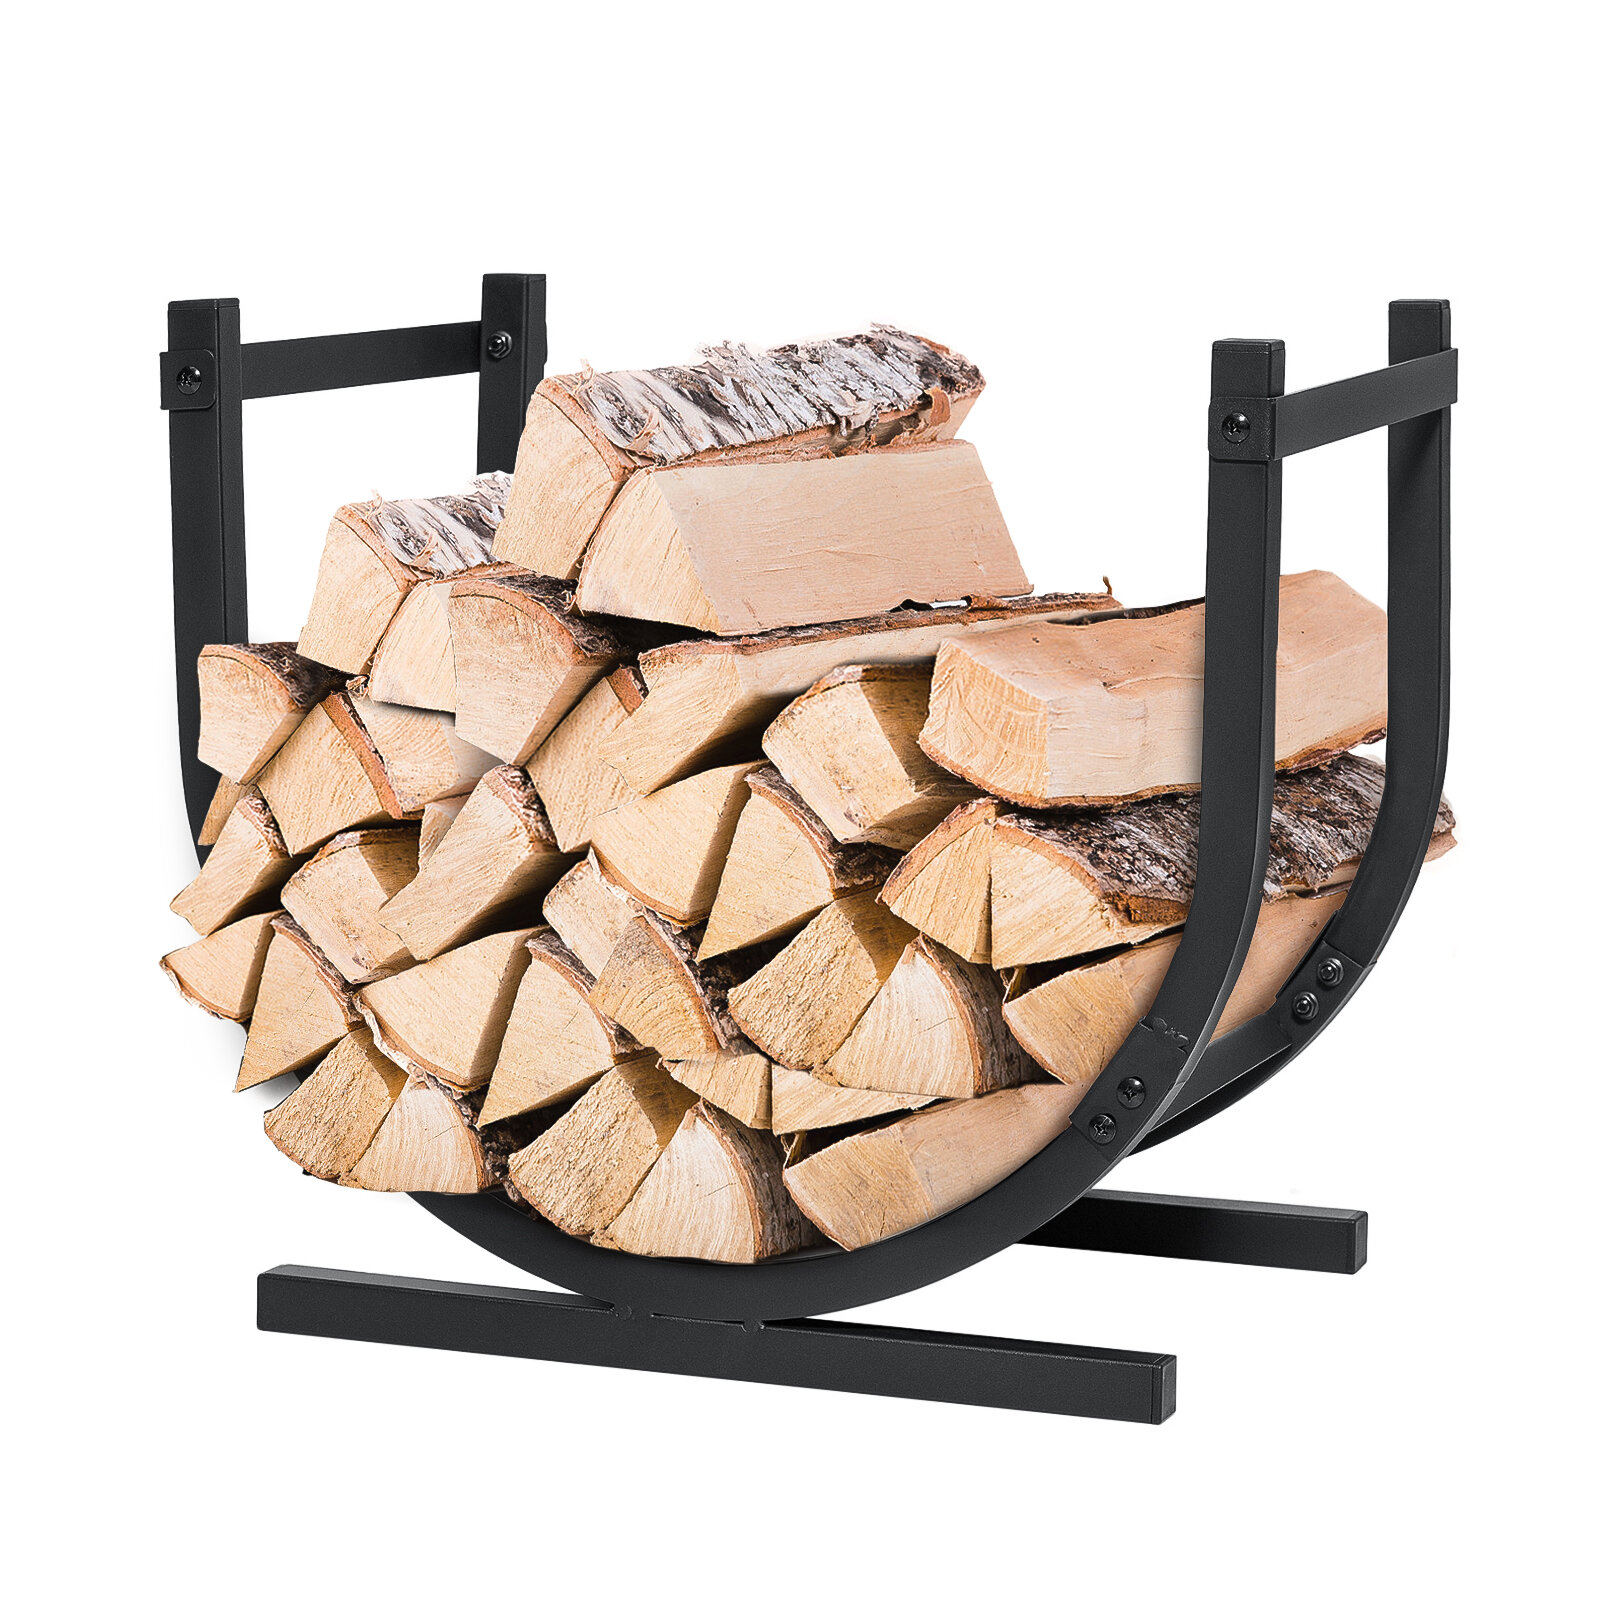 

SinglyFire 19 Inch Firewood Rack Holder for Fireplace Wood Log Storage Rack Small Decorative Firewood Log Rack for Patio